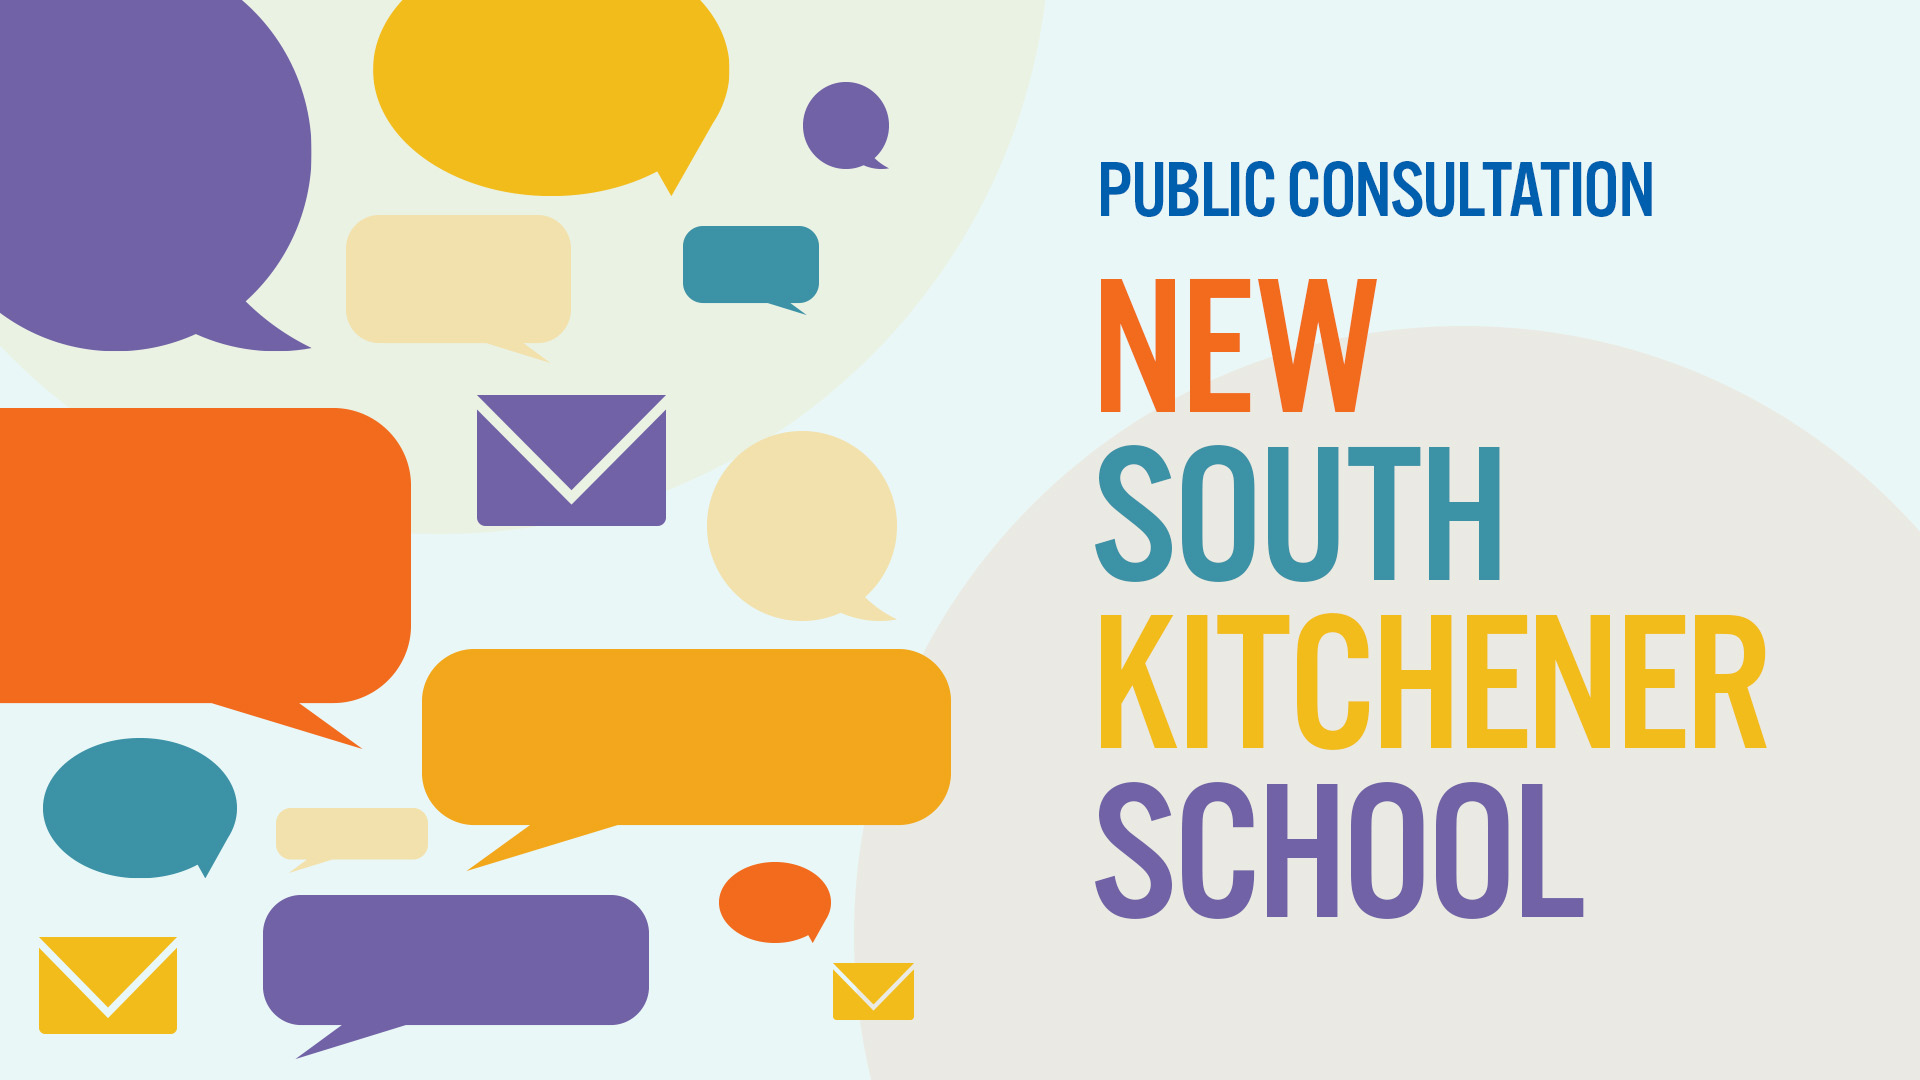 New South Kitchener School: Public Consultation